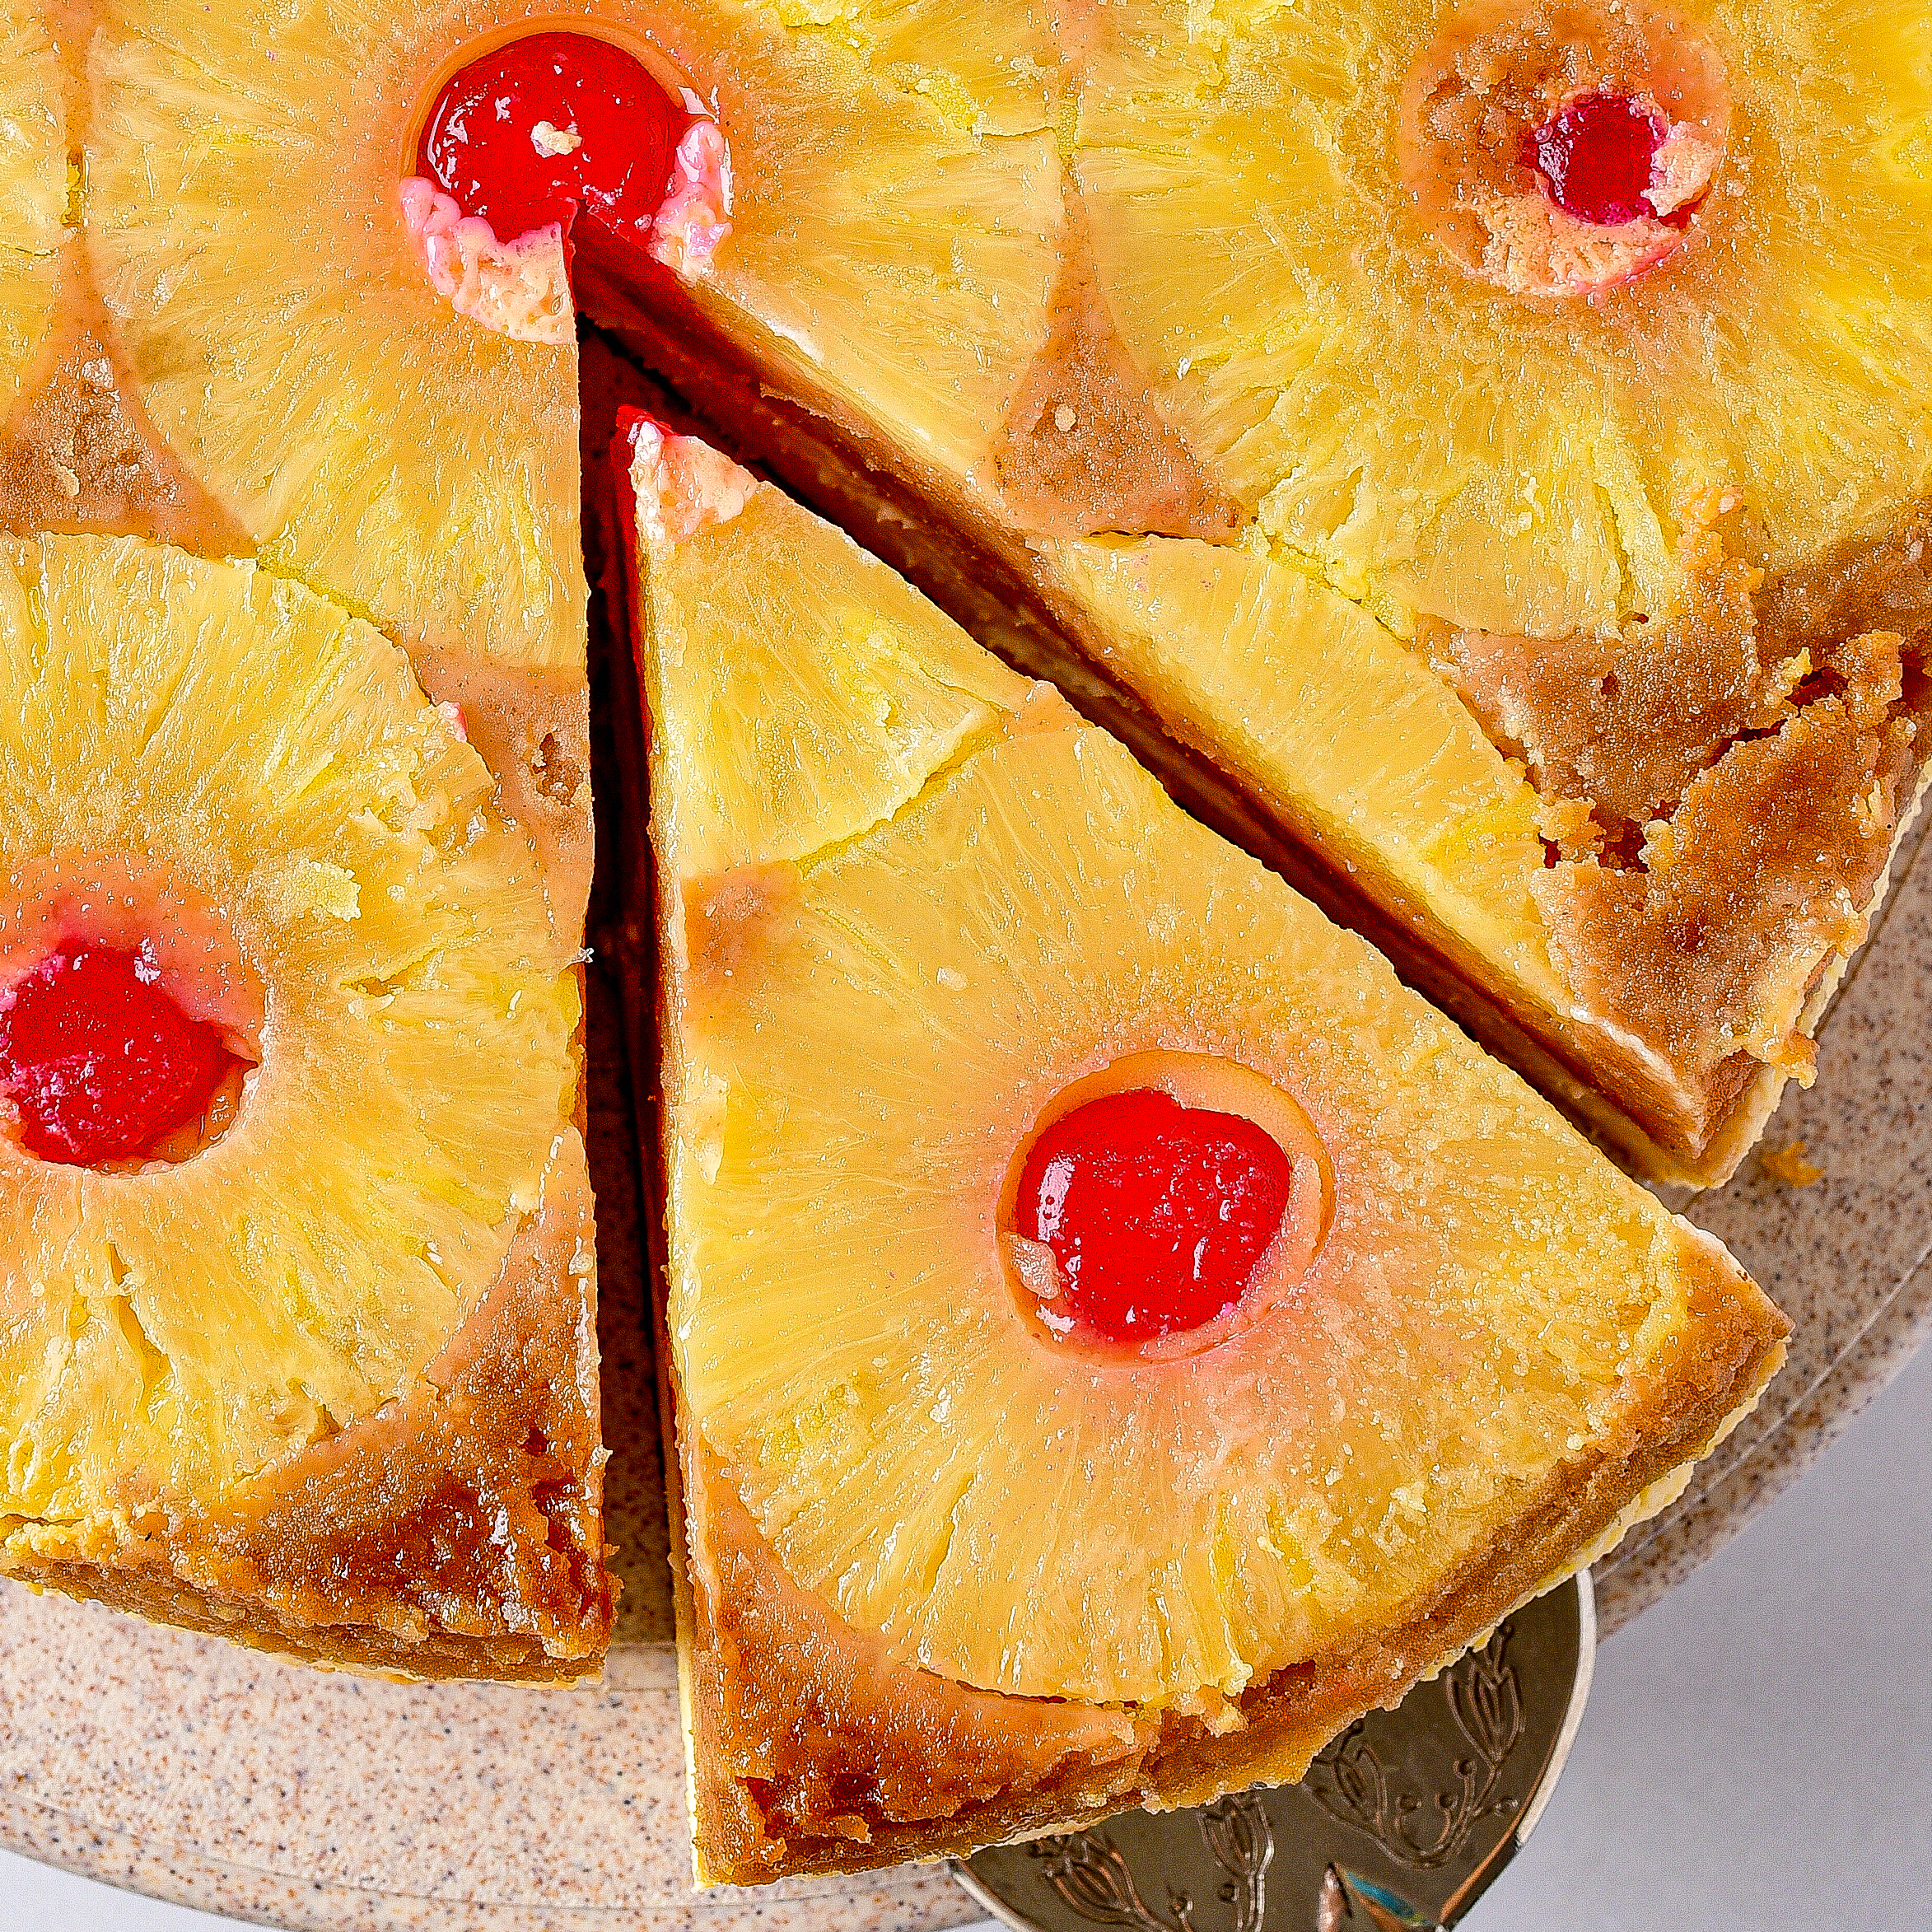 https://sweetpeaskitchen.com/wp-content/uploads/2022/11/Pineapple-Upside-Down-Cake-s.jpg